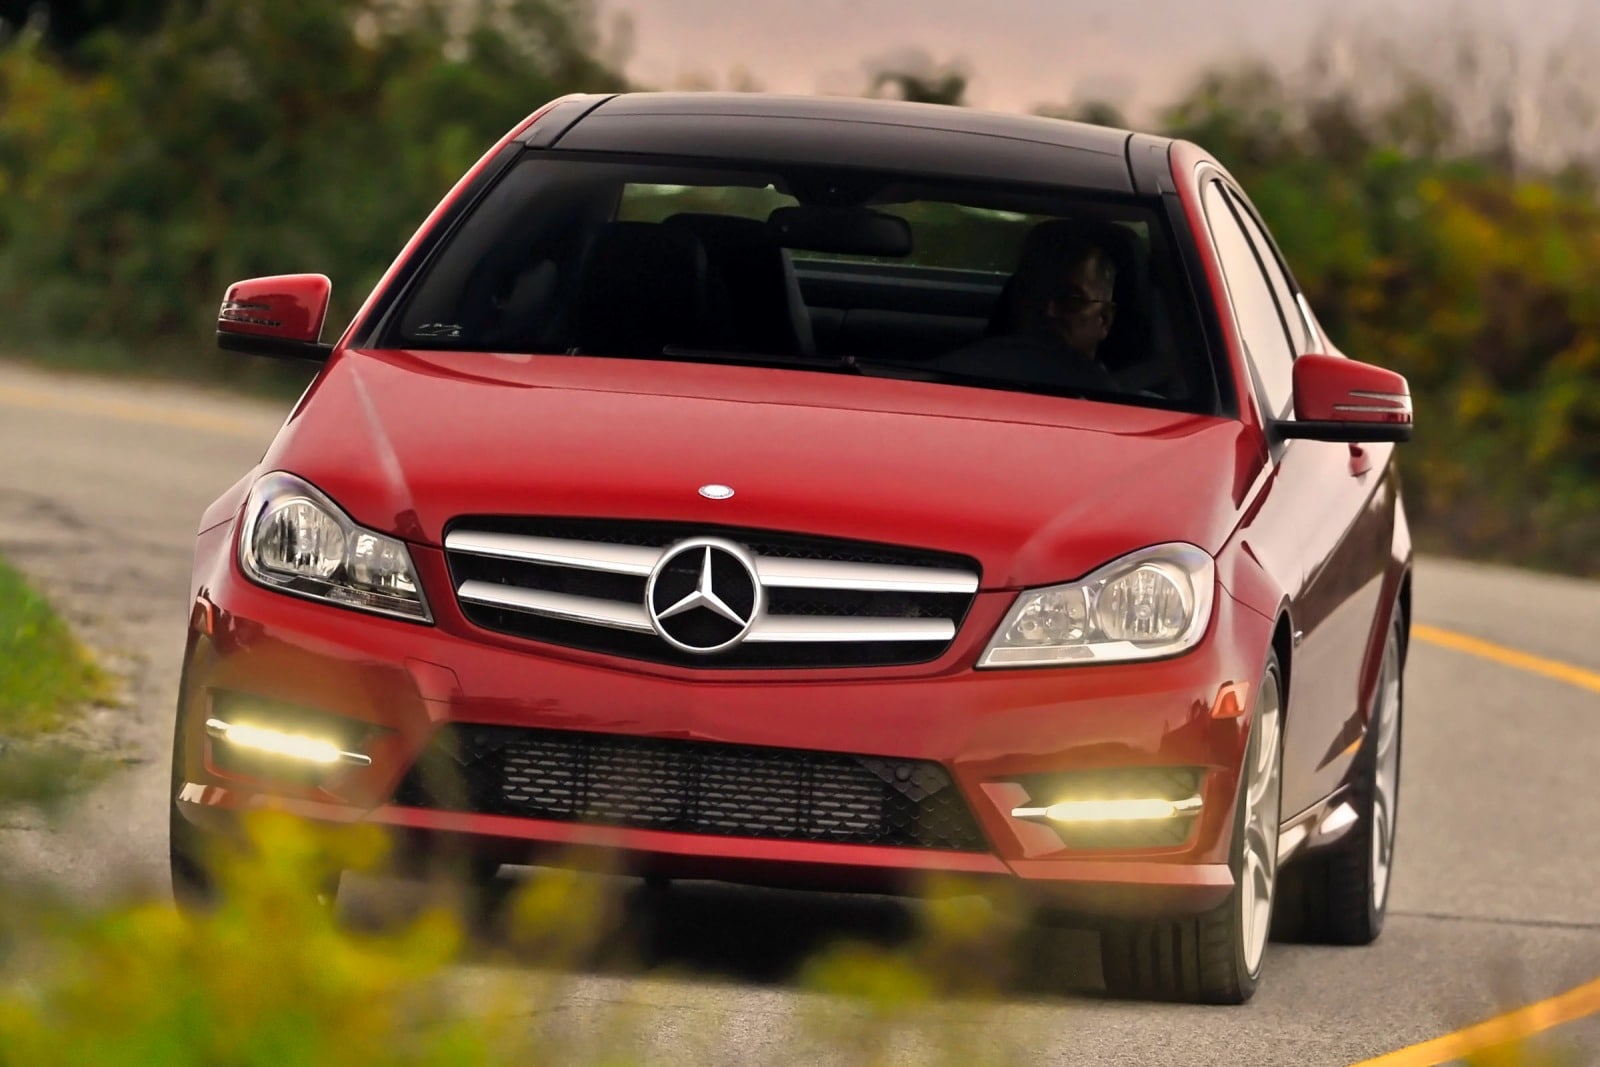 2014 Mercedes-Benz C-Class Review & Ratings | Edmunds